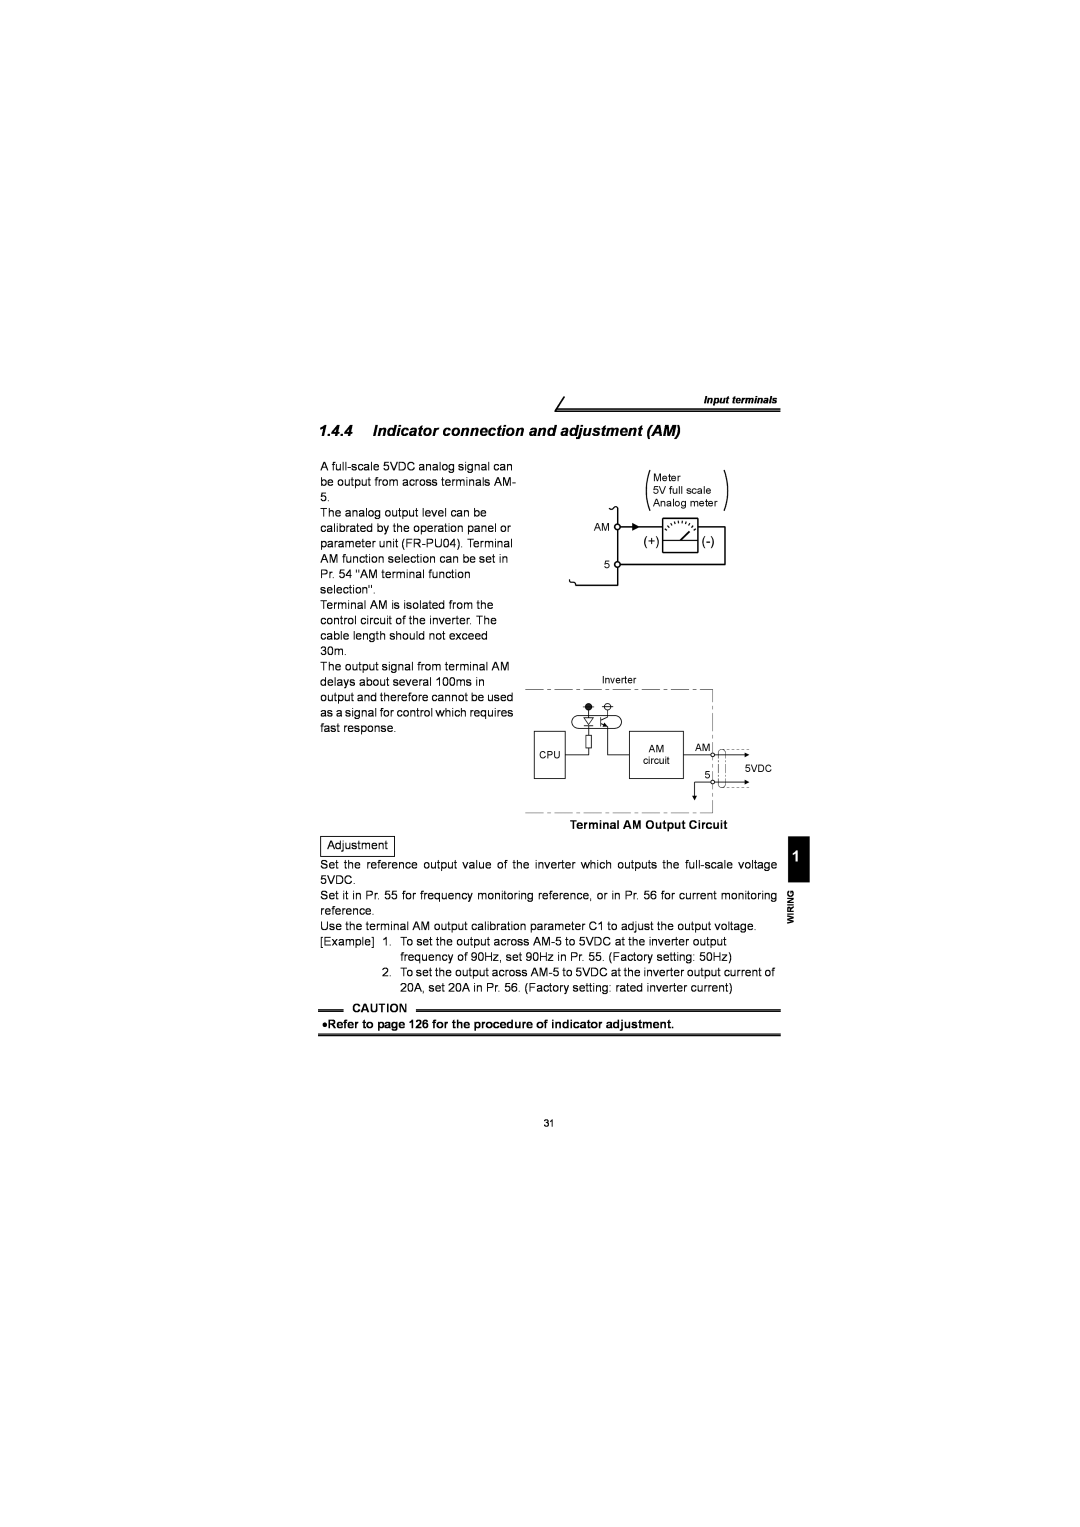 Mitsubishi Electronics FR-S500 instruction manual Indicator connection and adjustment AM, Terminal AM Output Circuit 